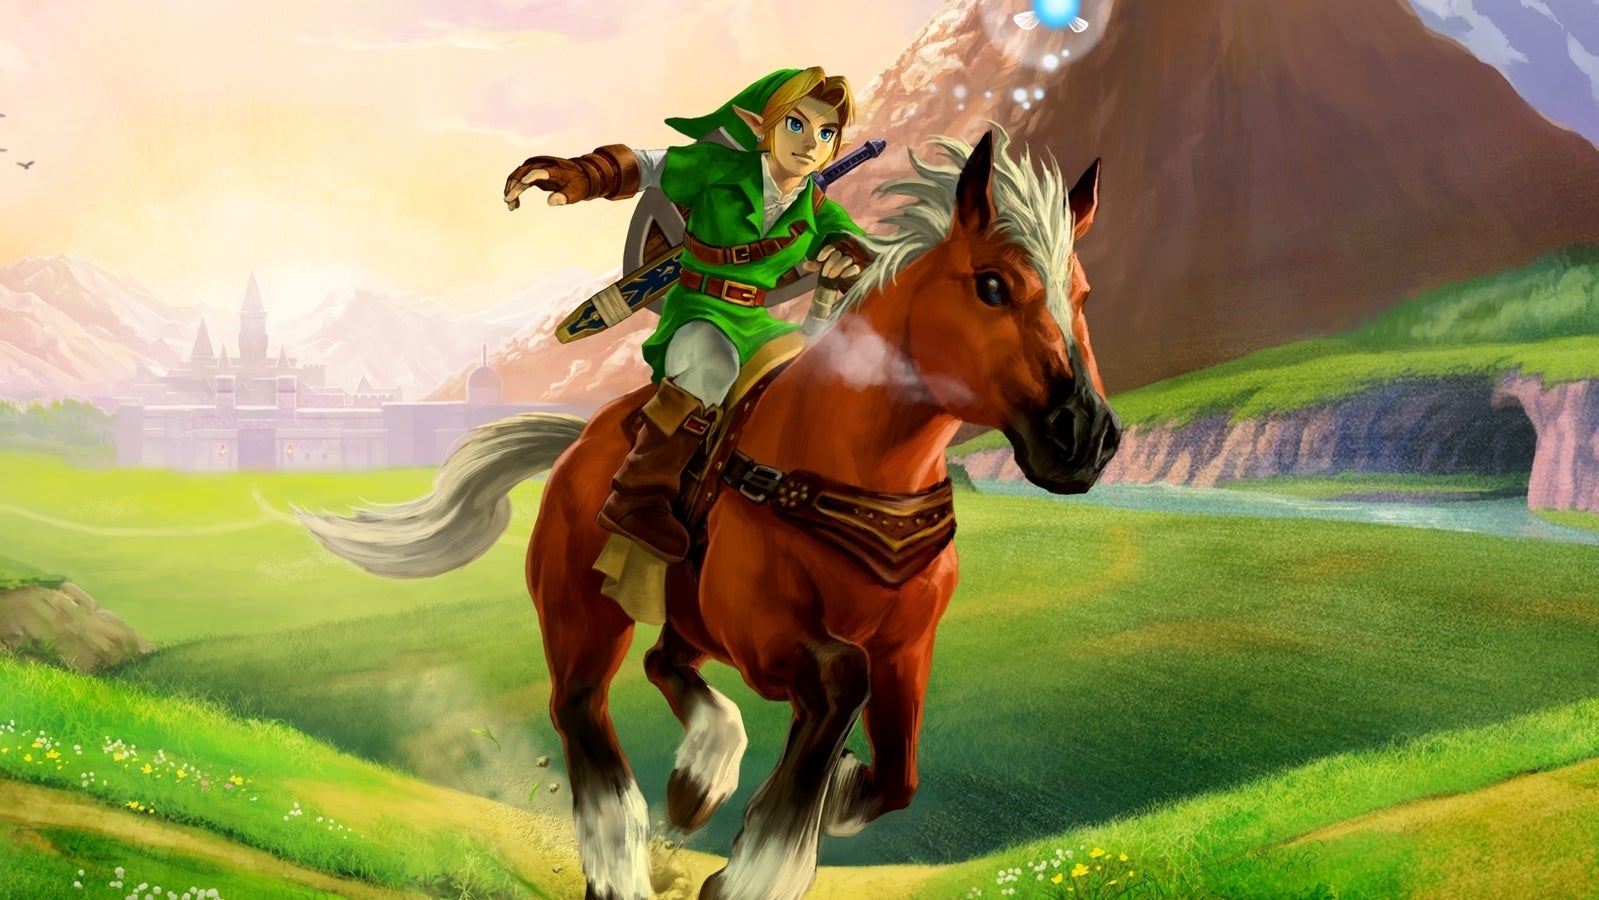 Bilder zu Zelda: Ocarina of Time: Speedrun-Weltrekord geknackt